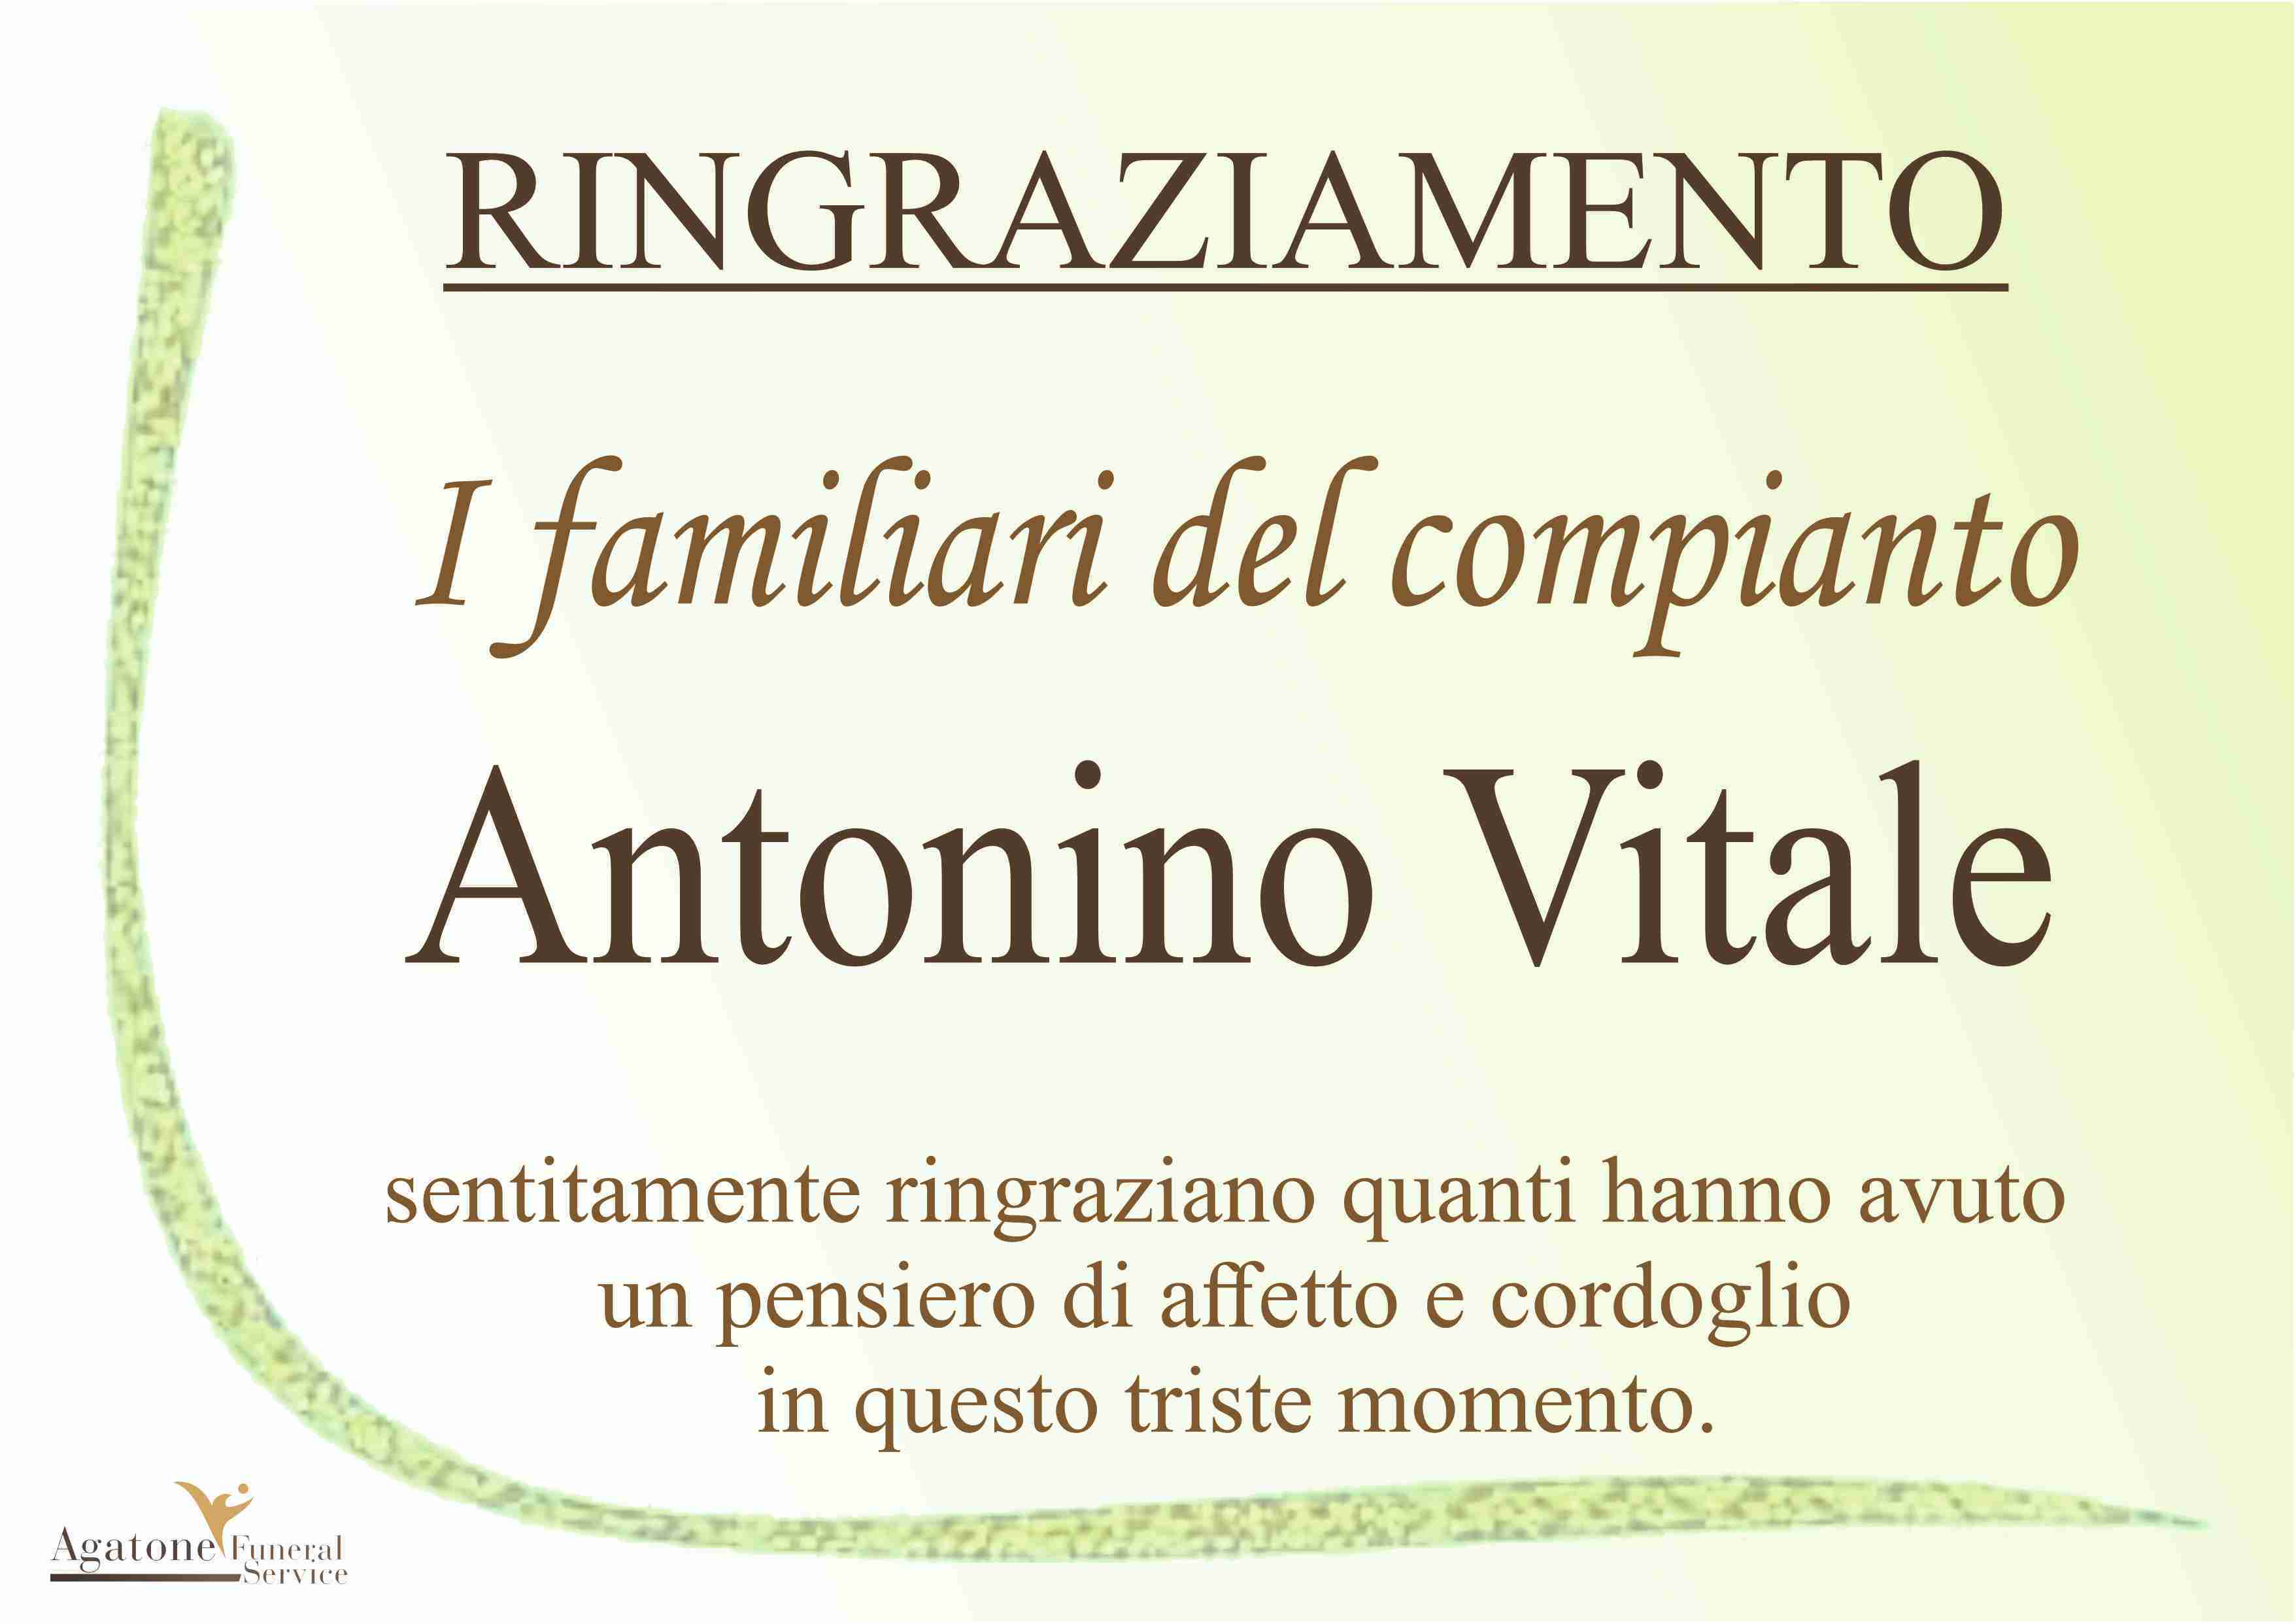 Antonino Vitale